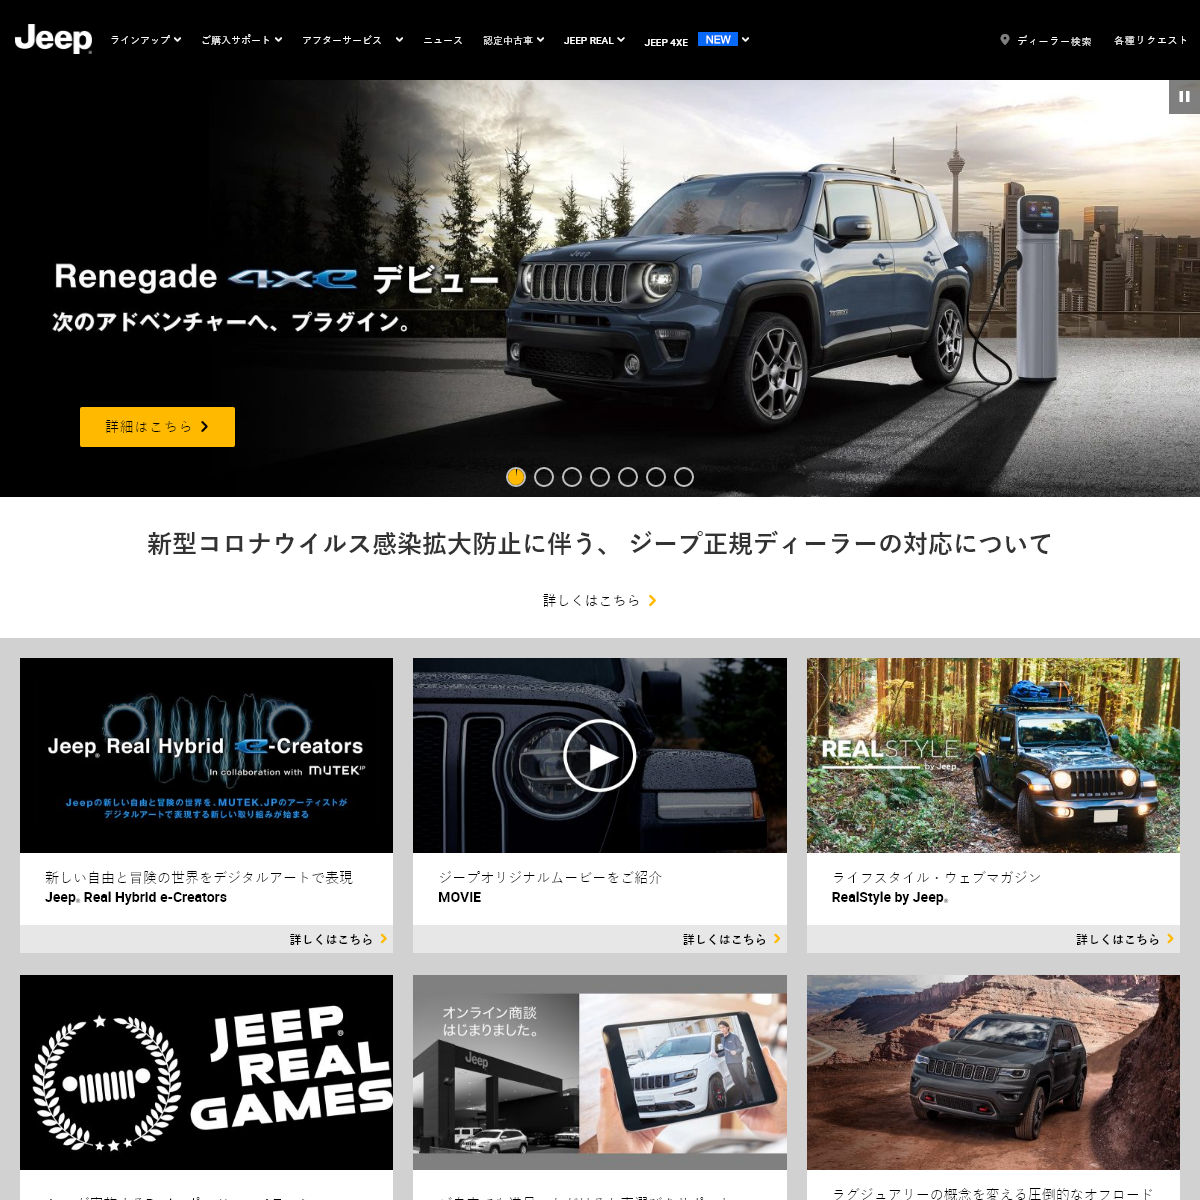 A complete backup of jeep-japan.com